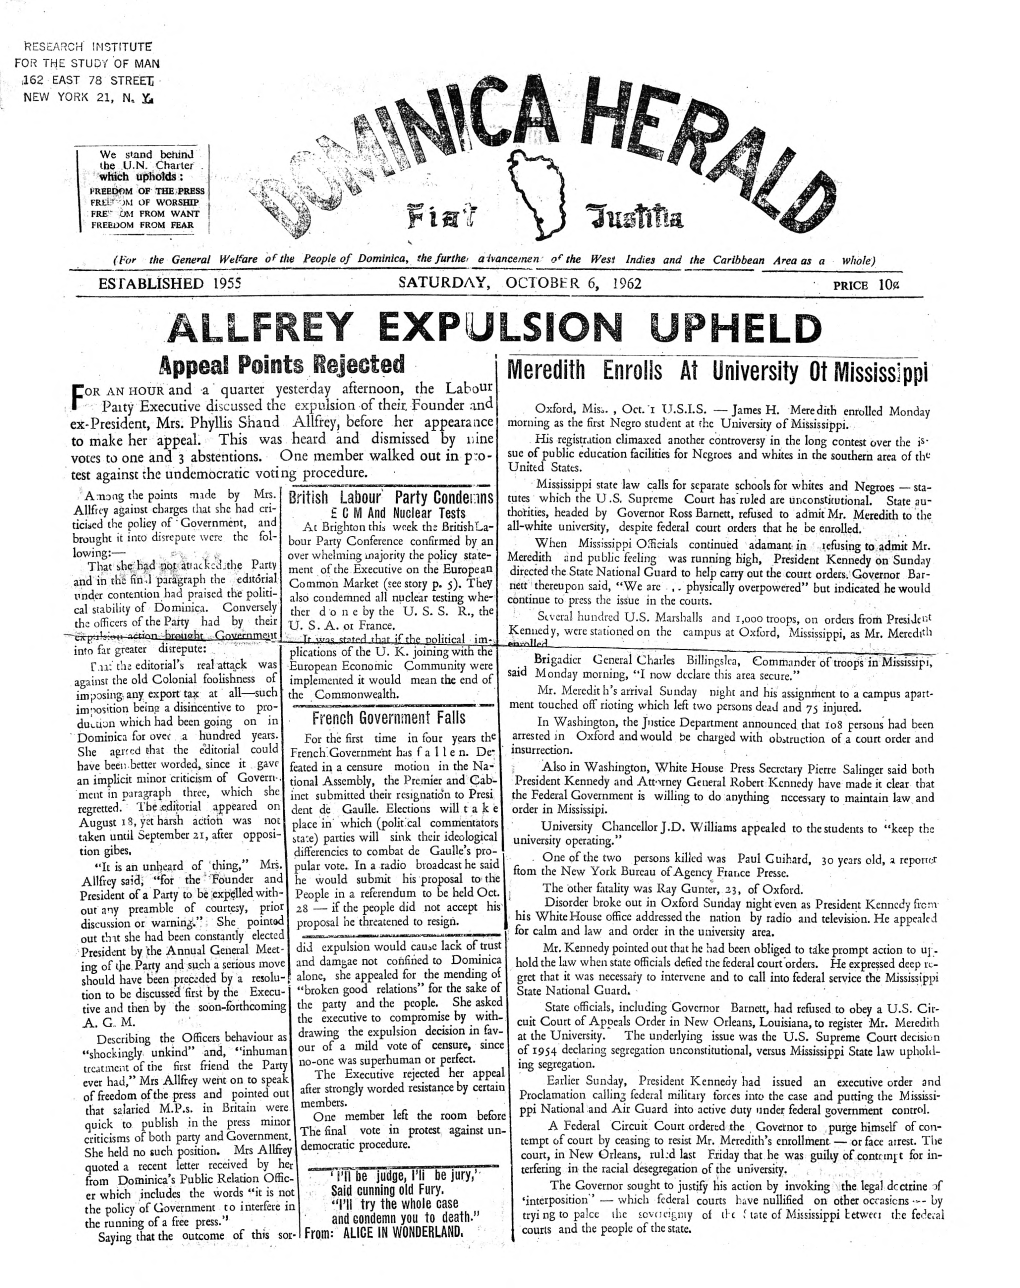 ESTABLISHED 1955 | SATURDAY, OCTOBER 6, A7 1962 PRICE 102 ALLFREY EXPULSION | up UPHELD